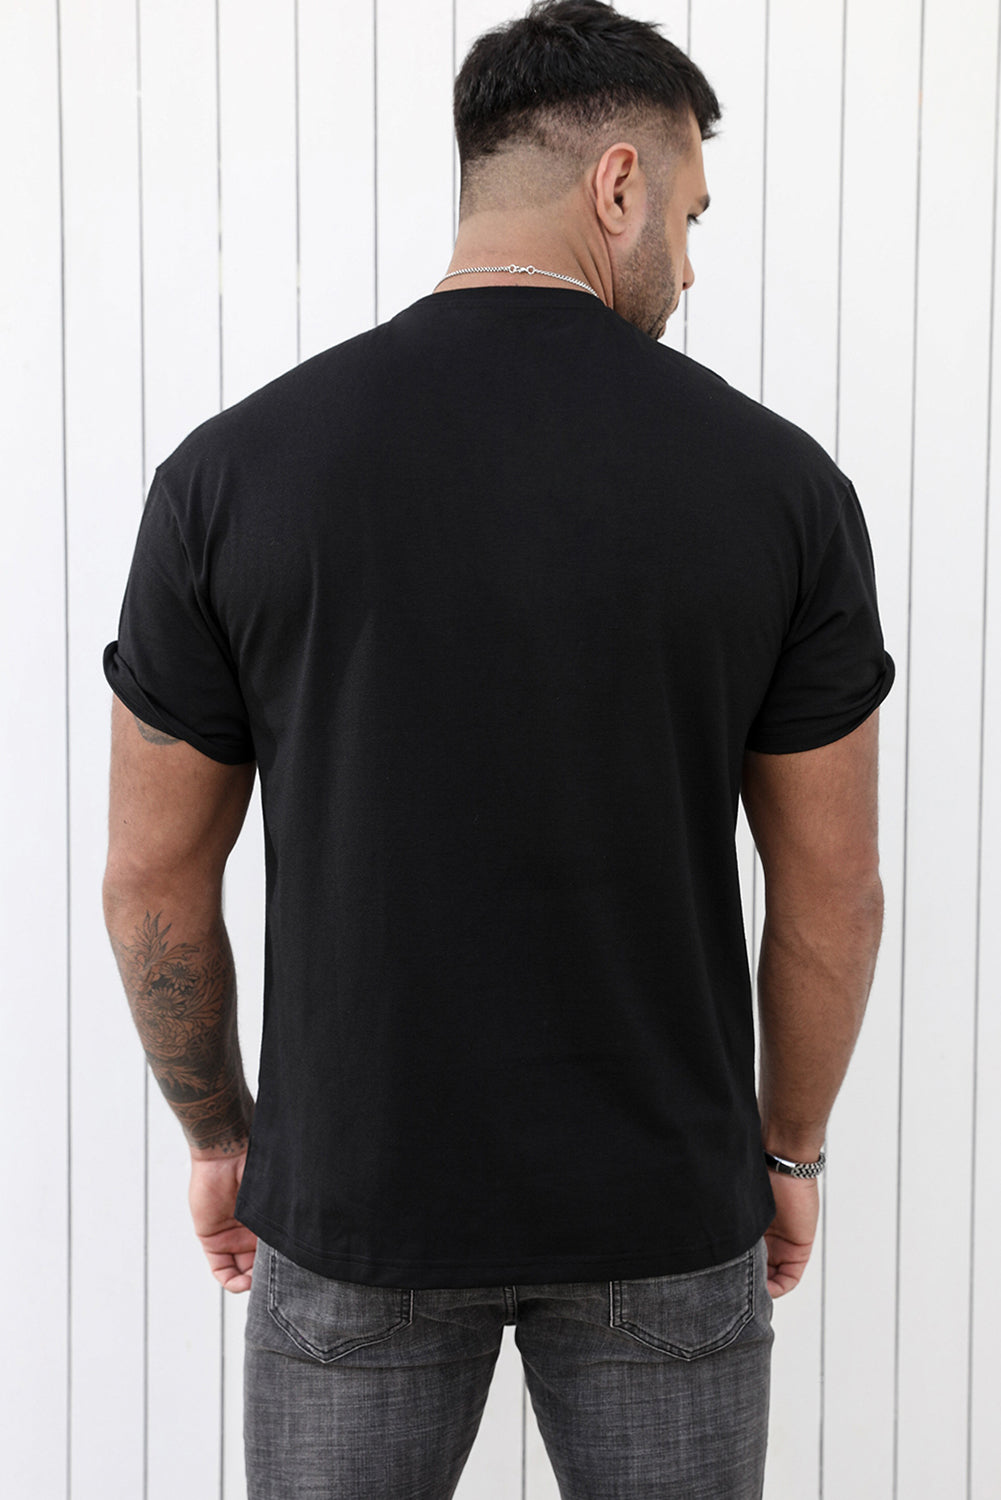 Black Men's Skeleton Graphic Print Drop Sleeve Crew Neck T Shirt Men's Tops JT's Designer Fashion